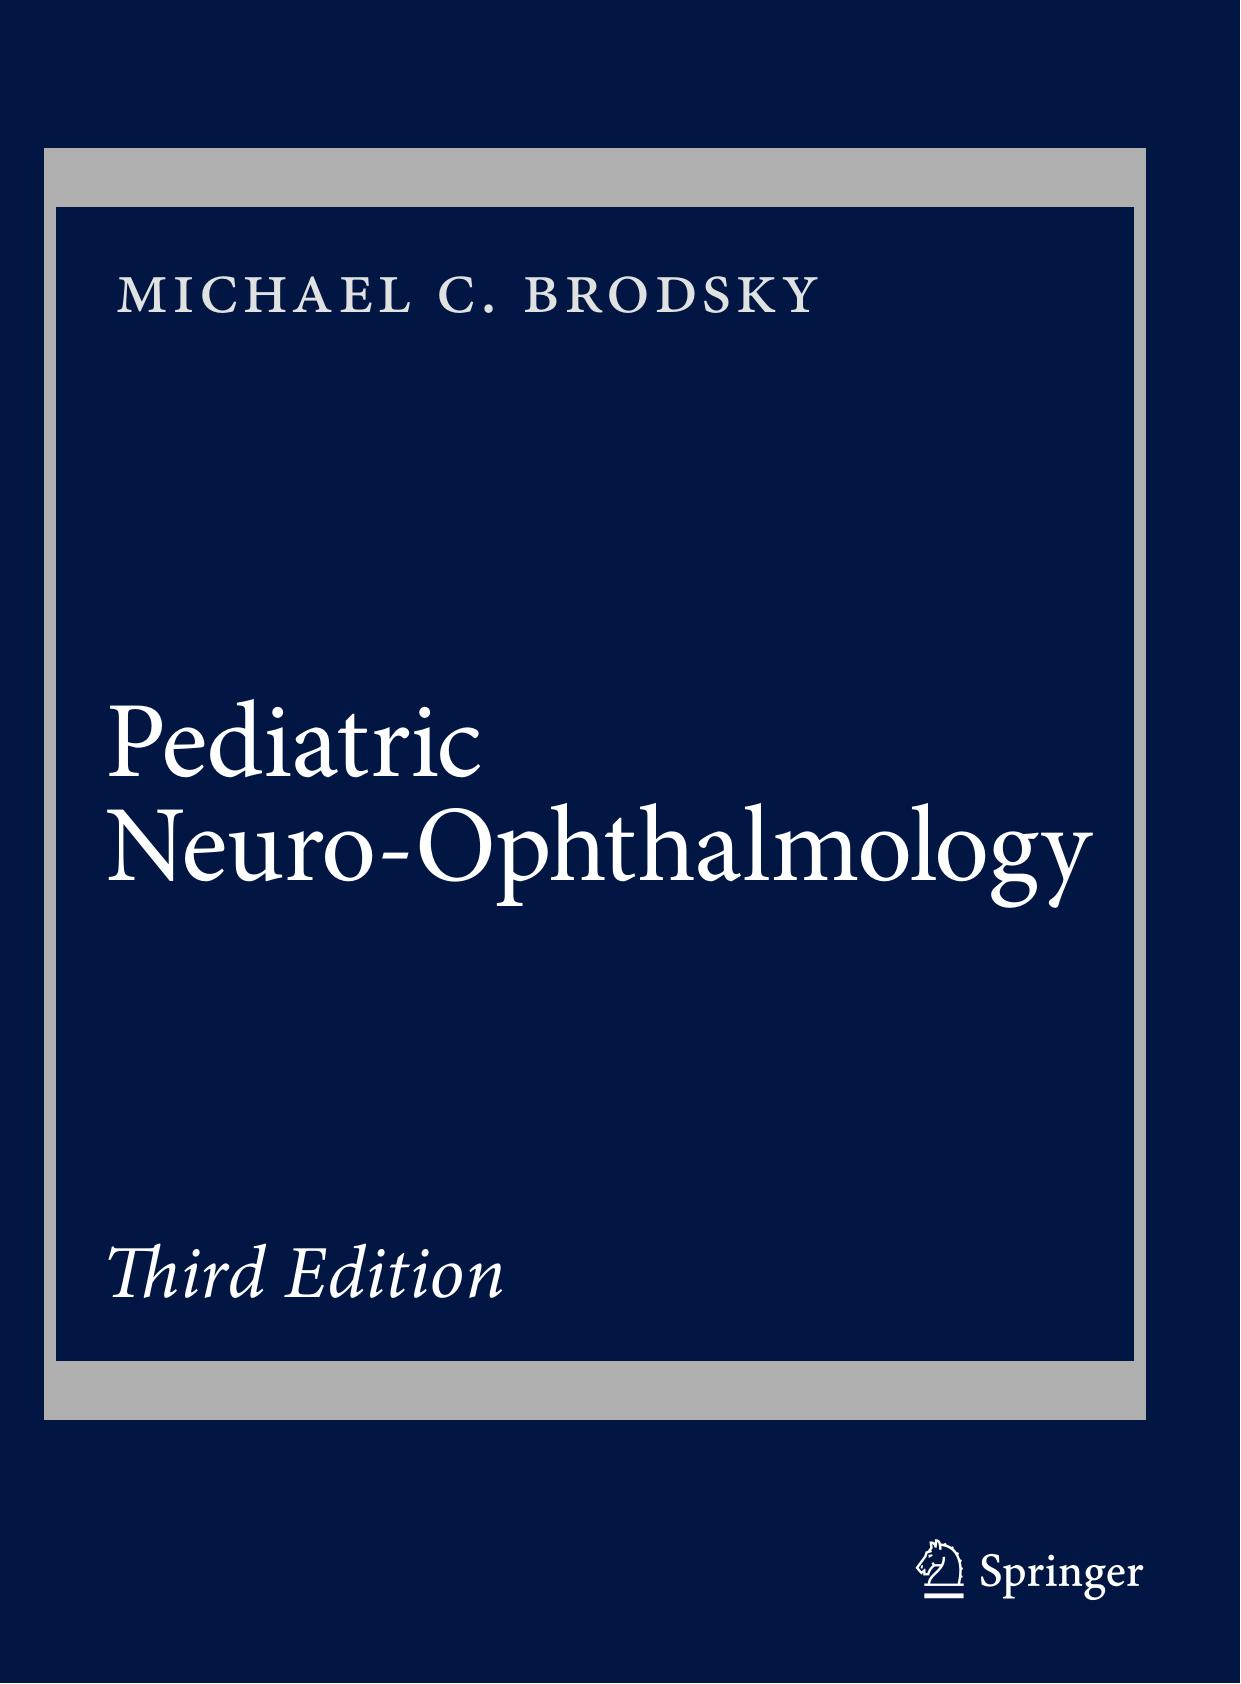 Pediatric Neuro-Ophthalmology 3rd ed 2016